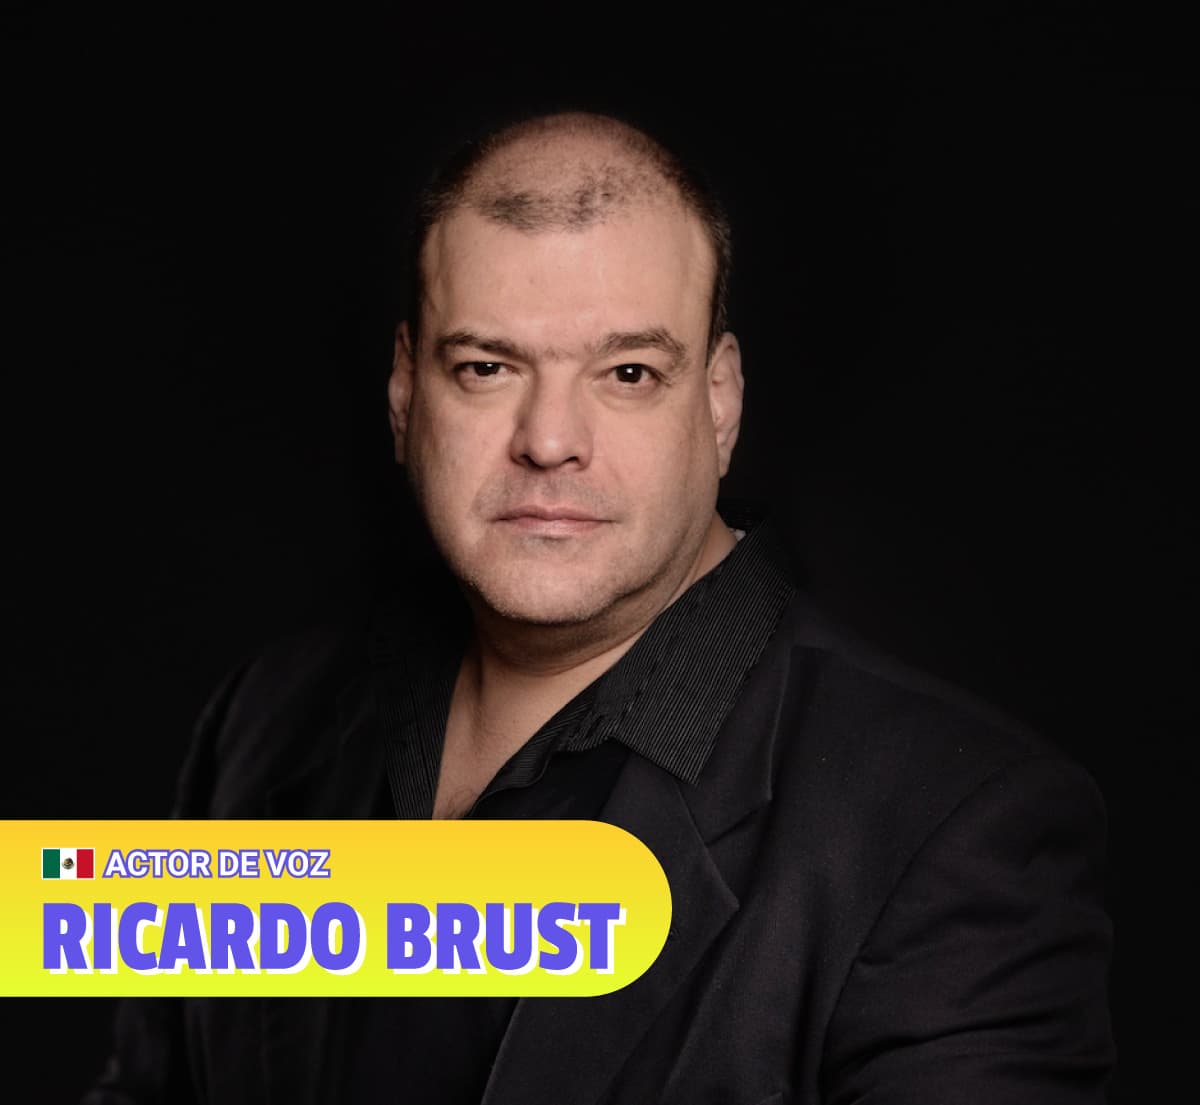 Ricardo Brust - Actor de Voz